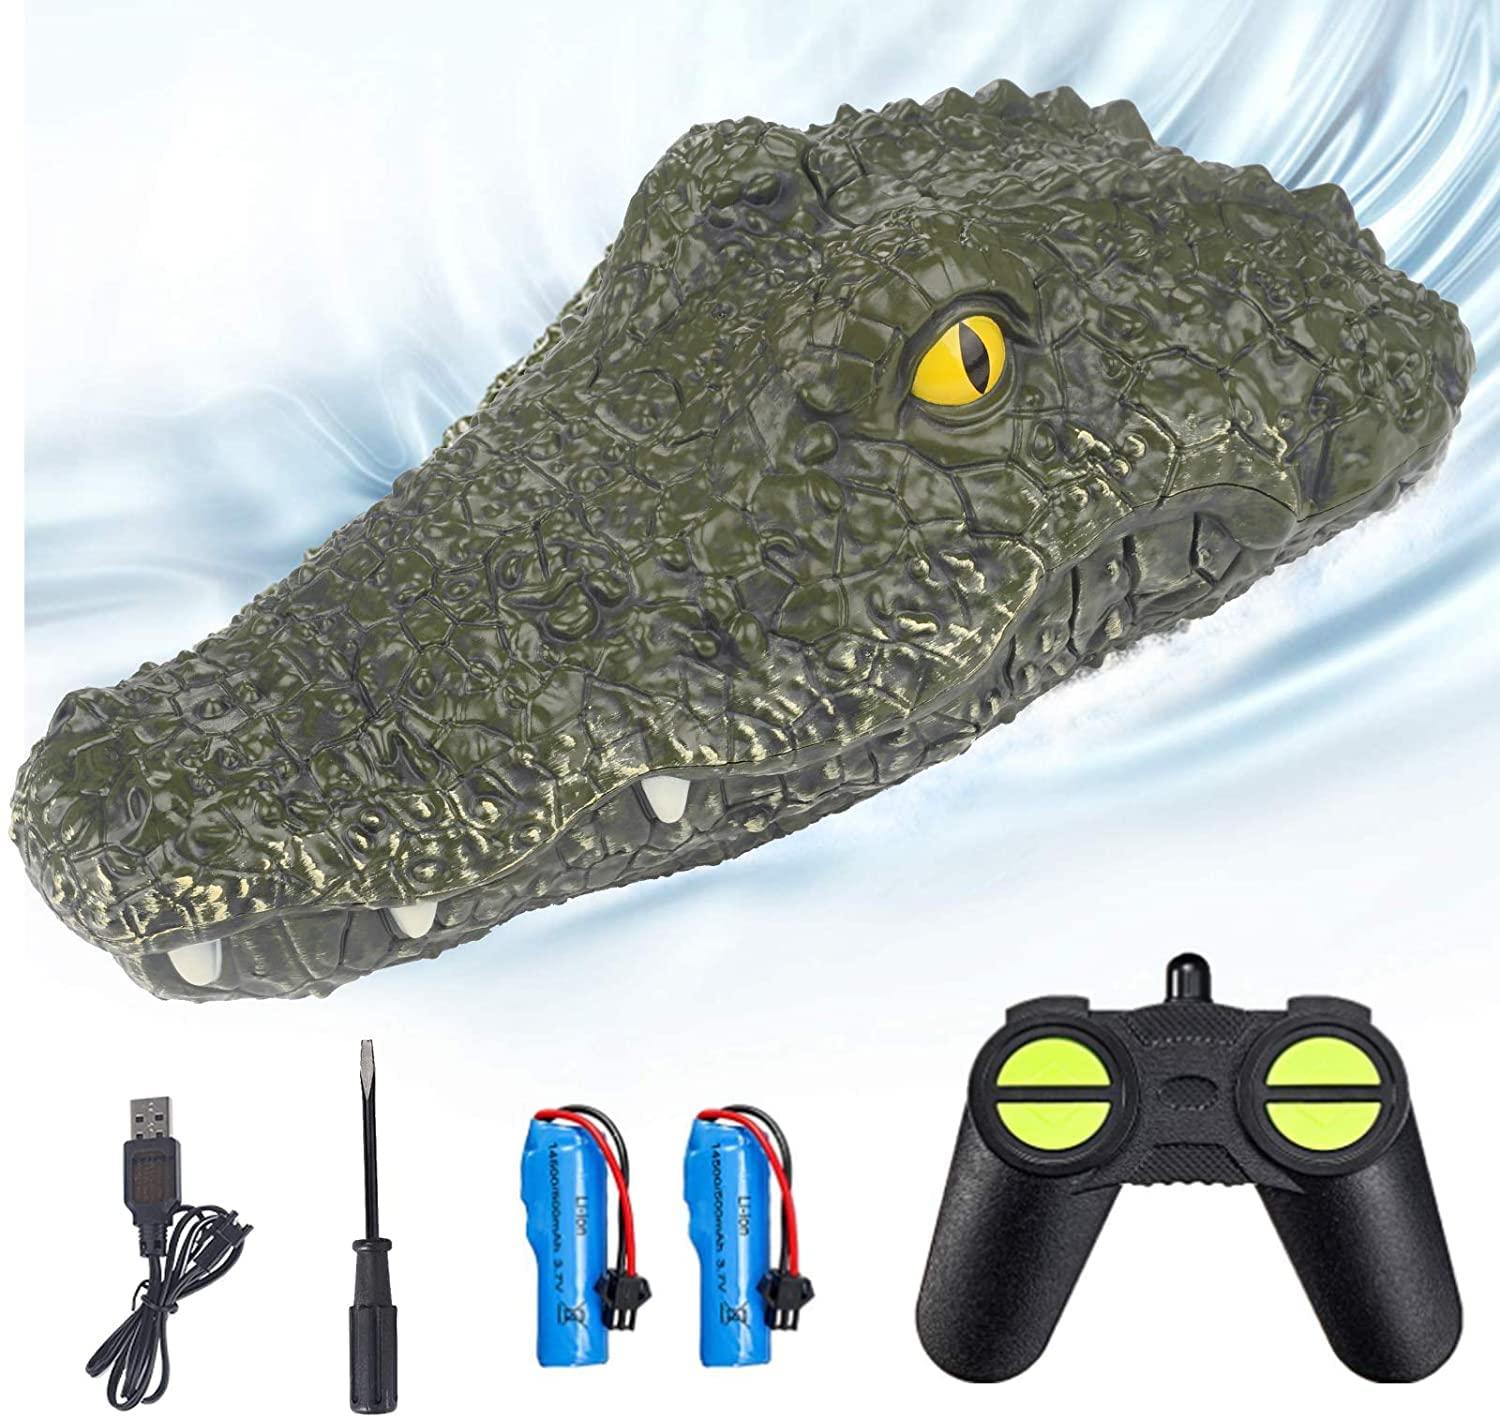 Best Remote Control Alligator:  Consider These Features When Buying a Remote Control Alligator